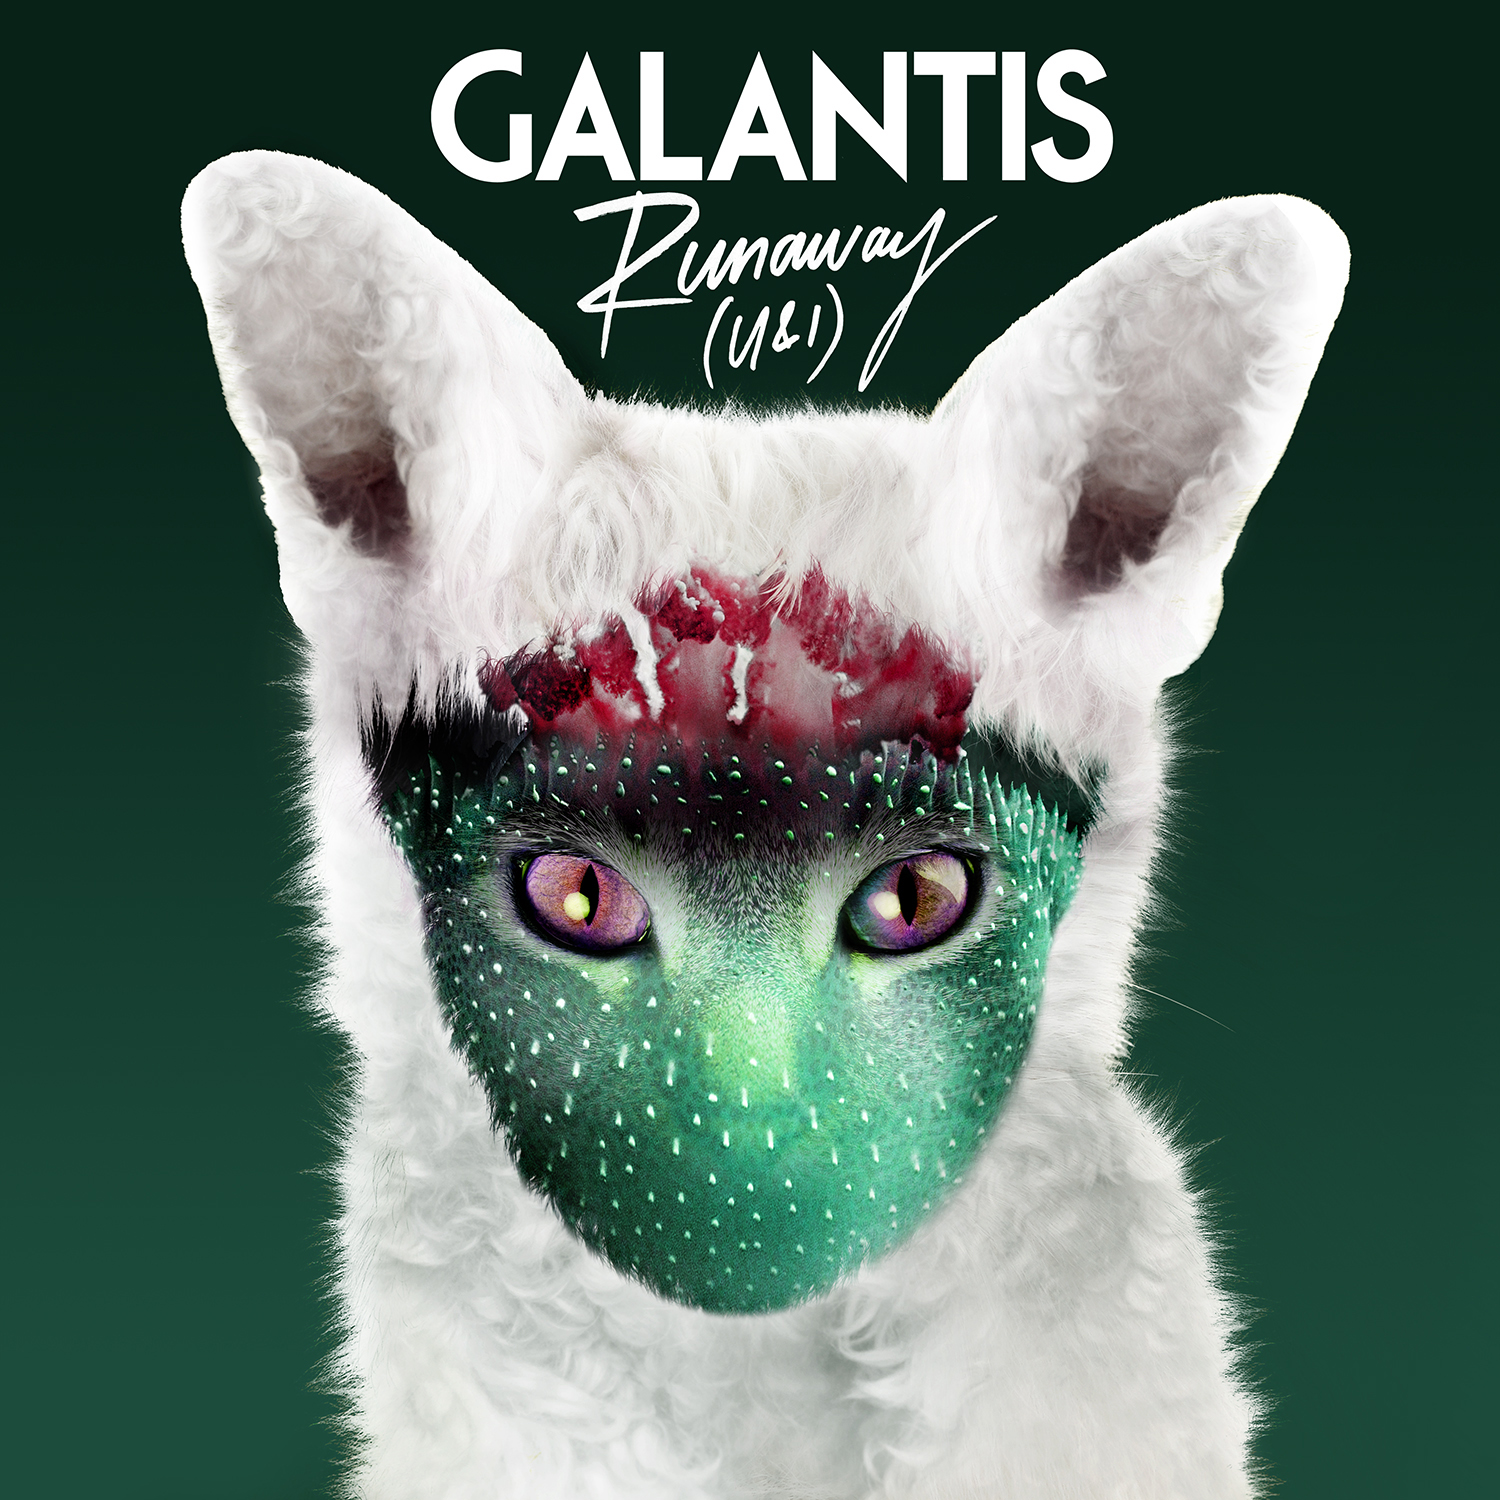 डाउनलोड करा Galantis - Runaway (U & I)